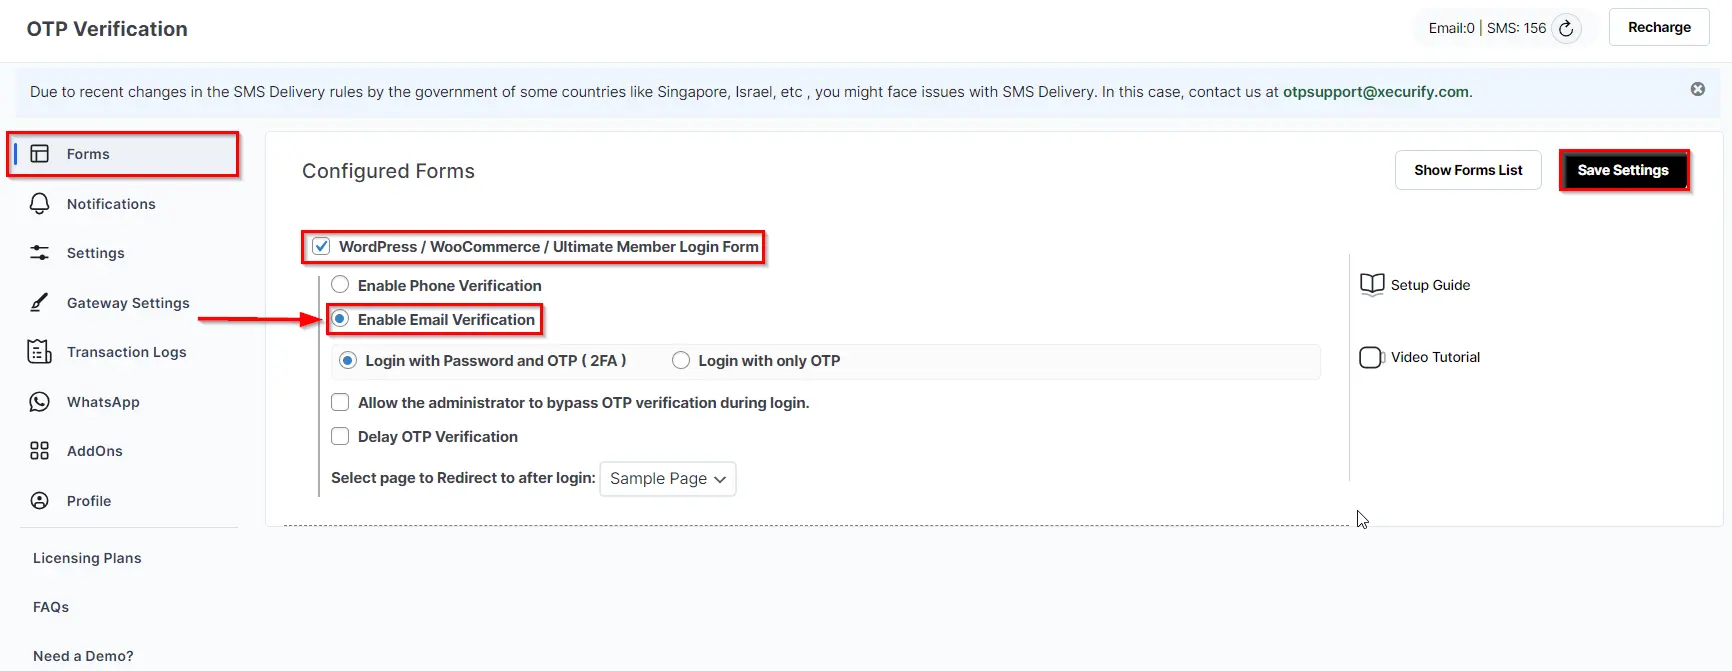 WordPress default login with OTP Verification - Enable enail verification option